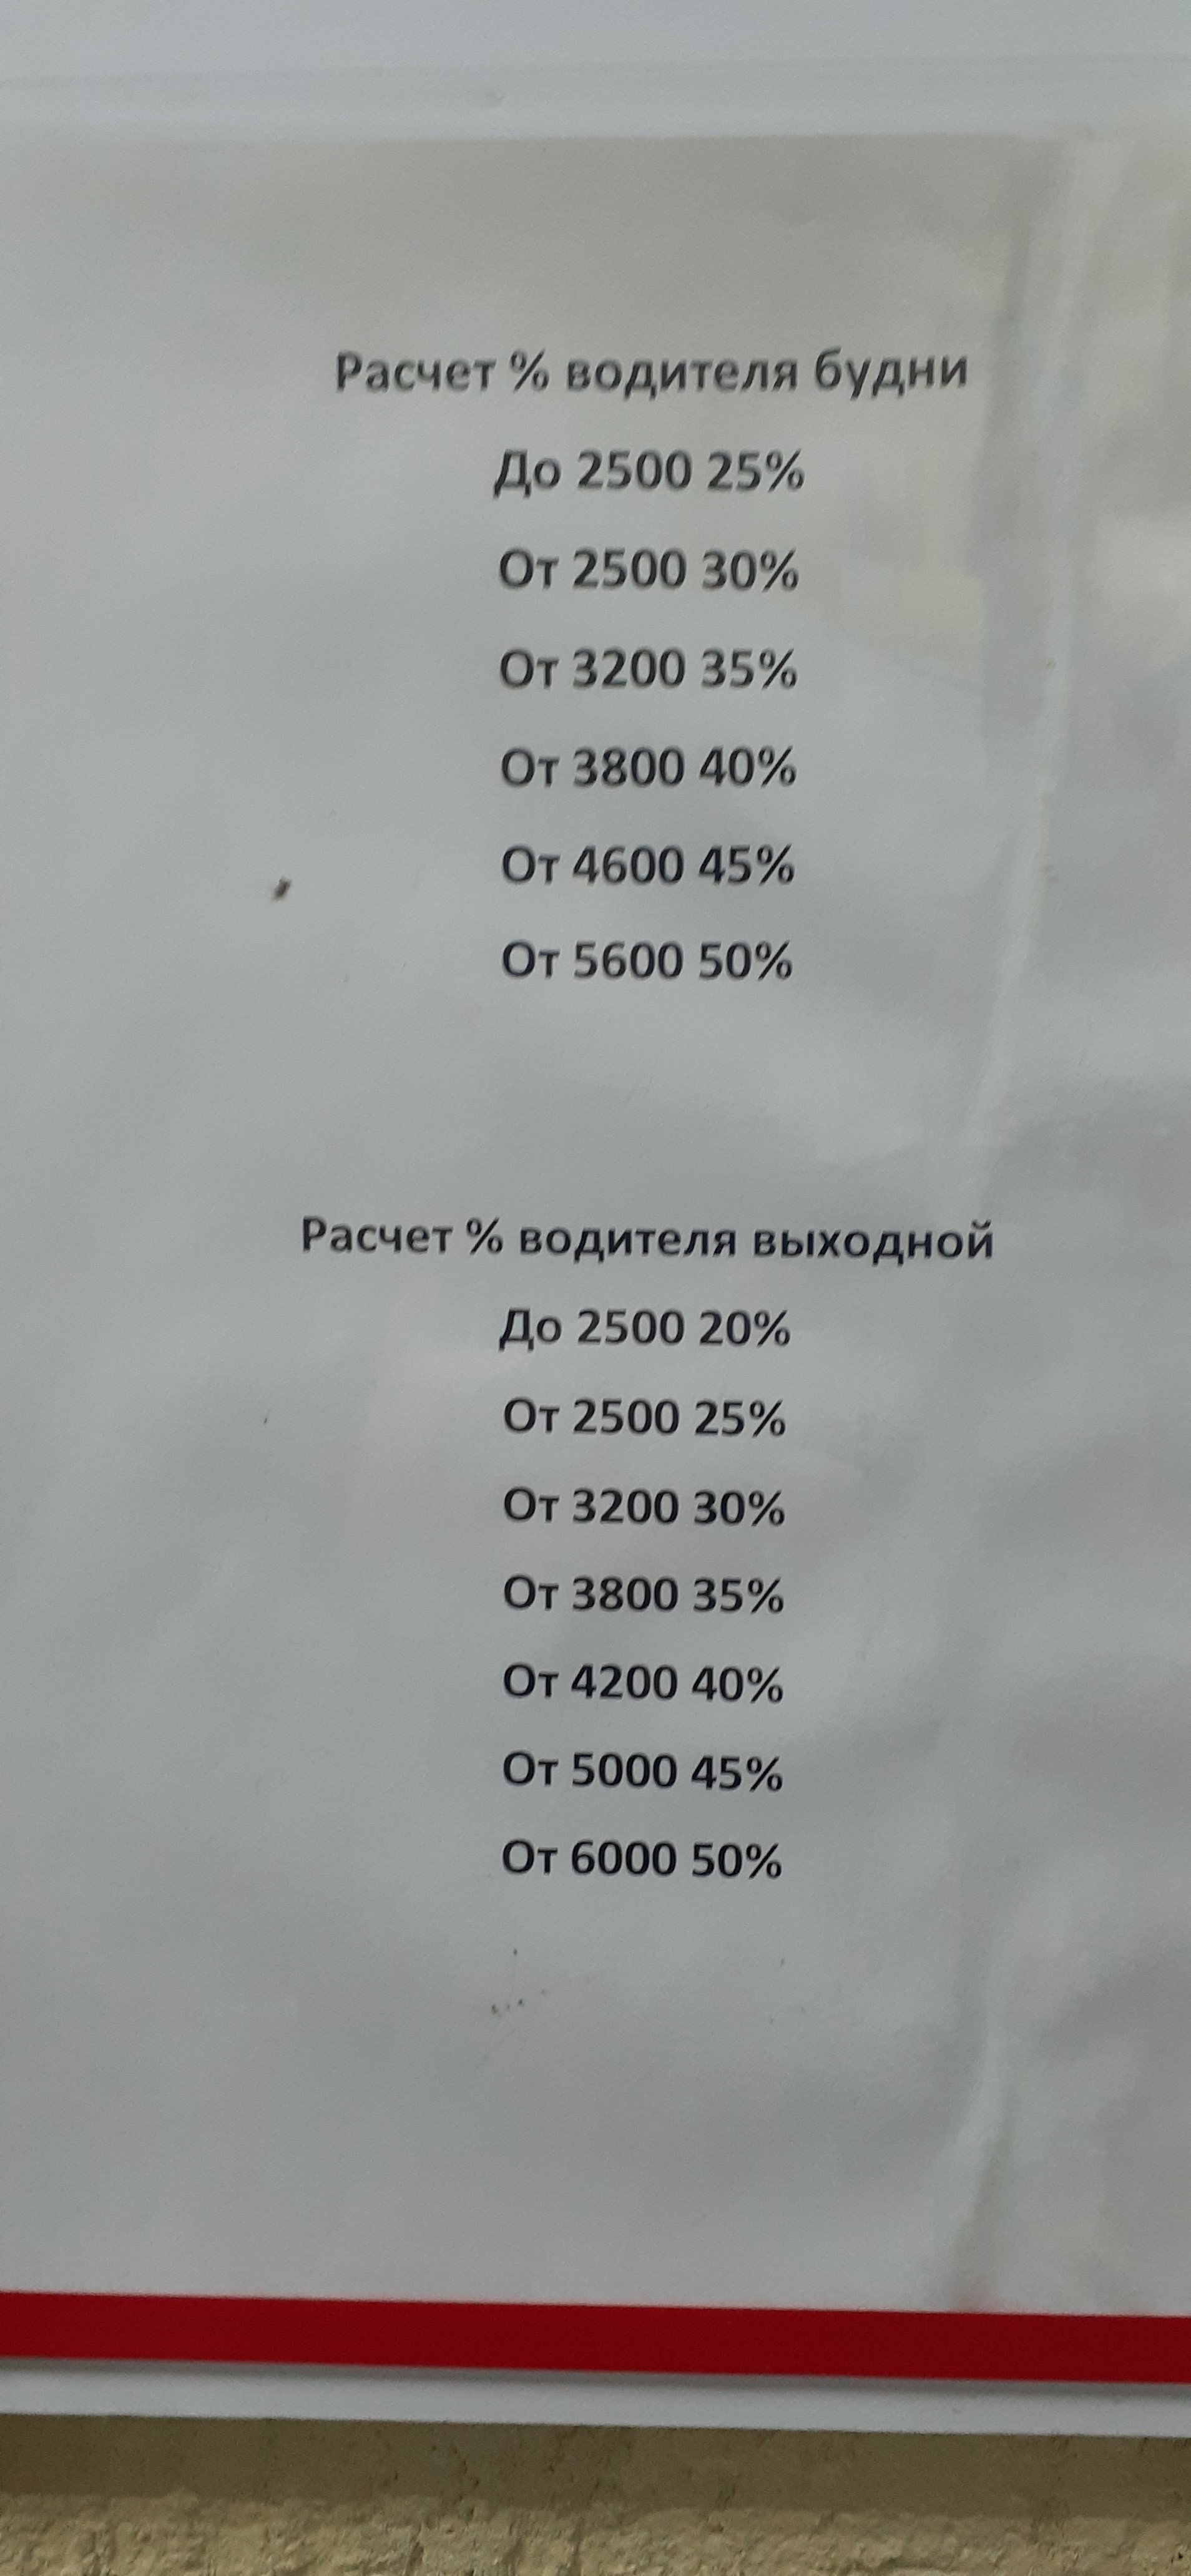 Percentages of taxi fleets 50/50 - My, Taxi, Salary, Yandex Taxi, Work, Longpost